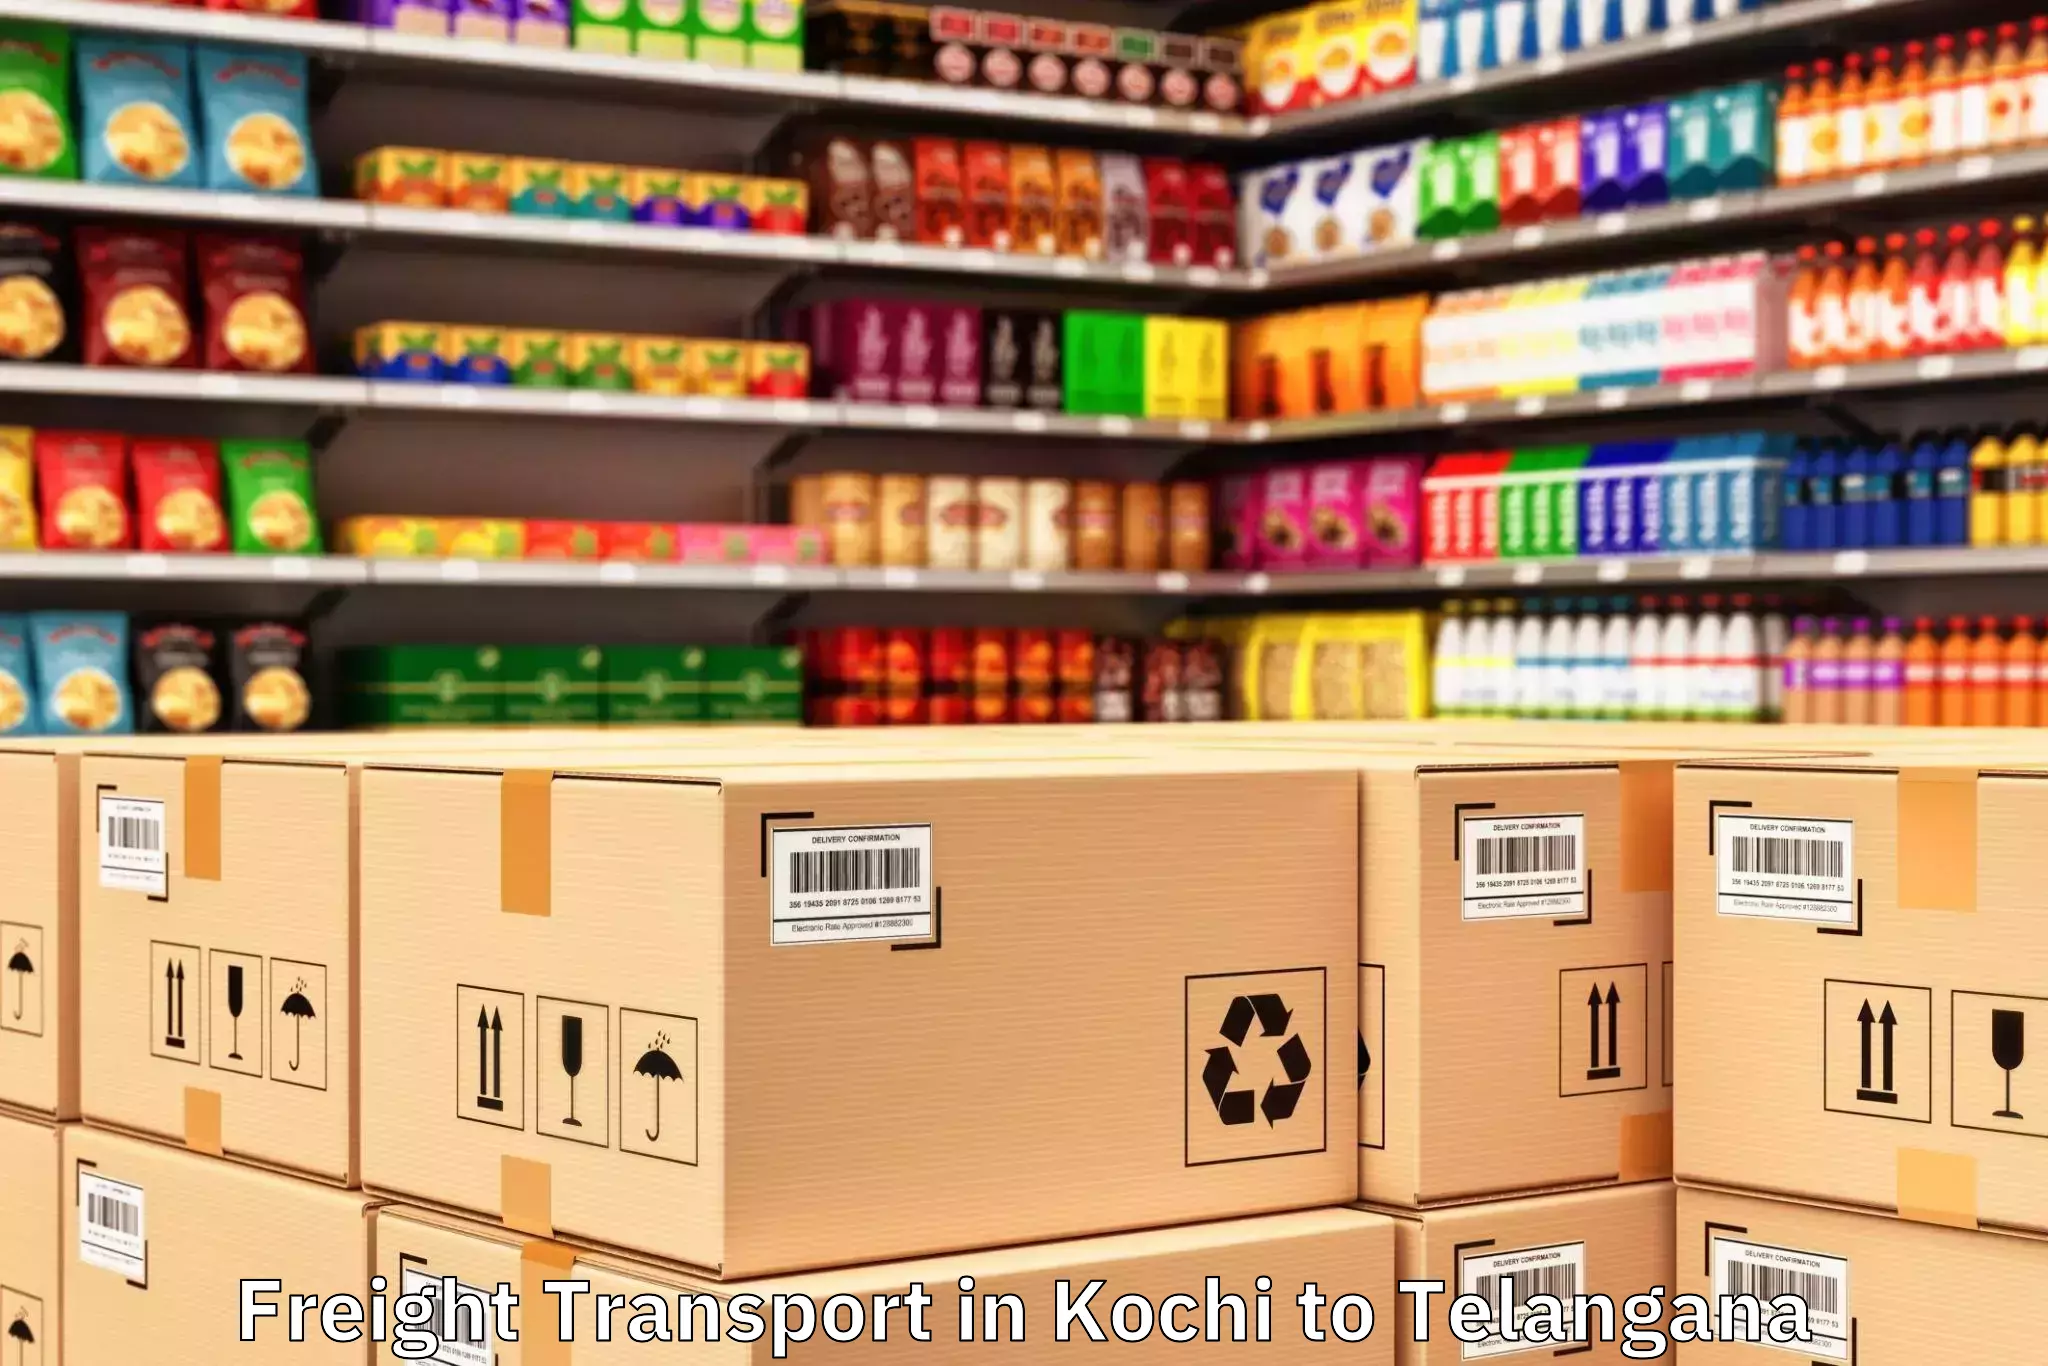 Professional Kochi to Kasipet Freight Transport